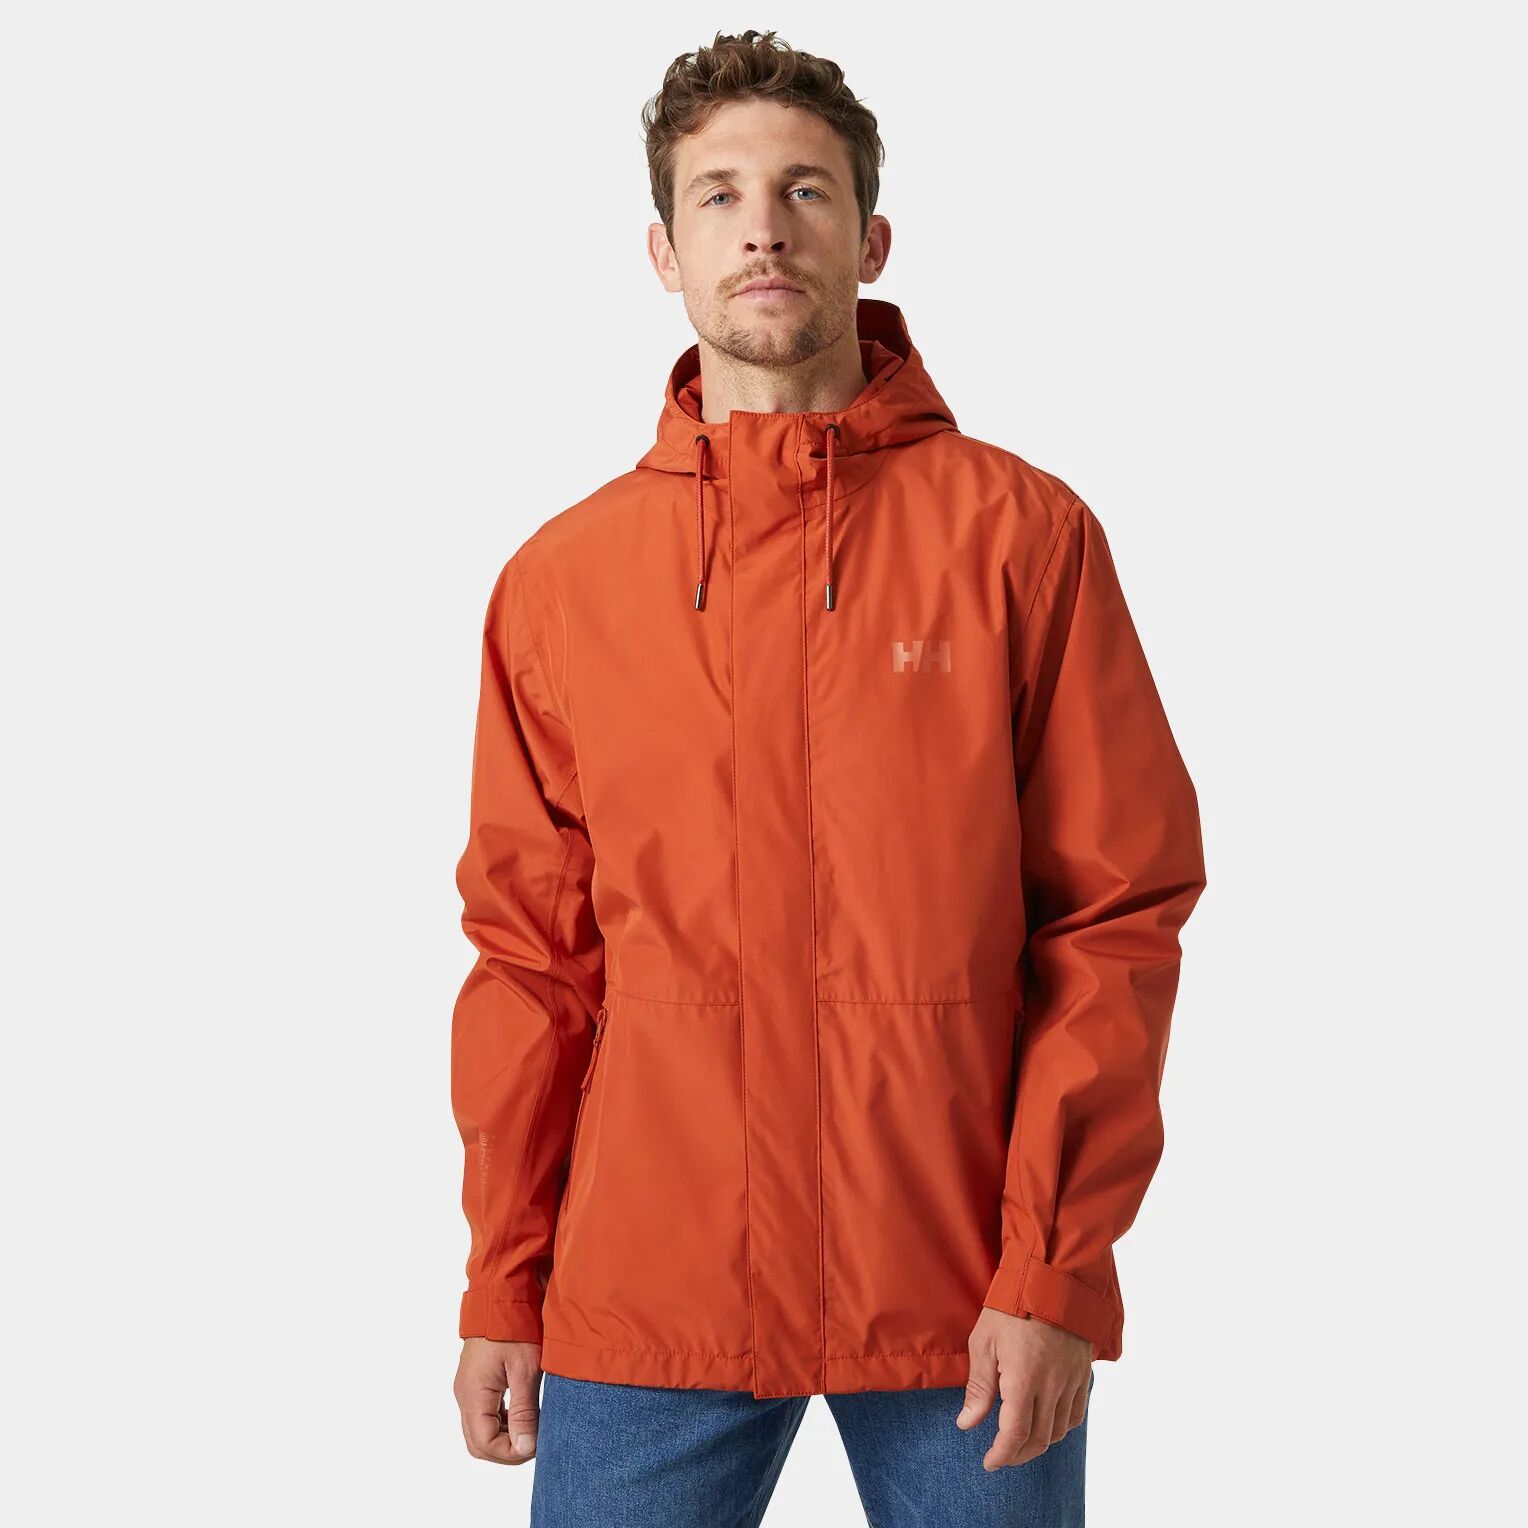 Helly Hansen Men's Urban Lab Rain Jacket Orange S - Canyon Orange - Male